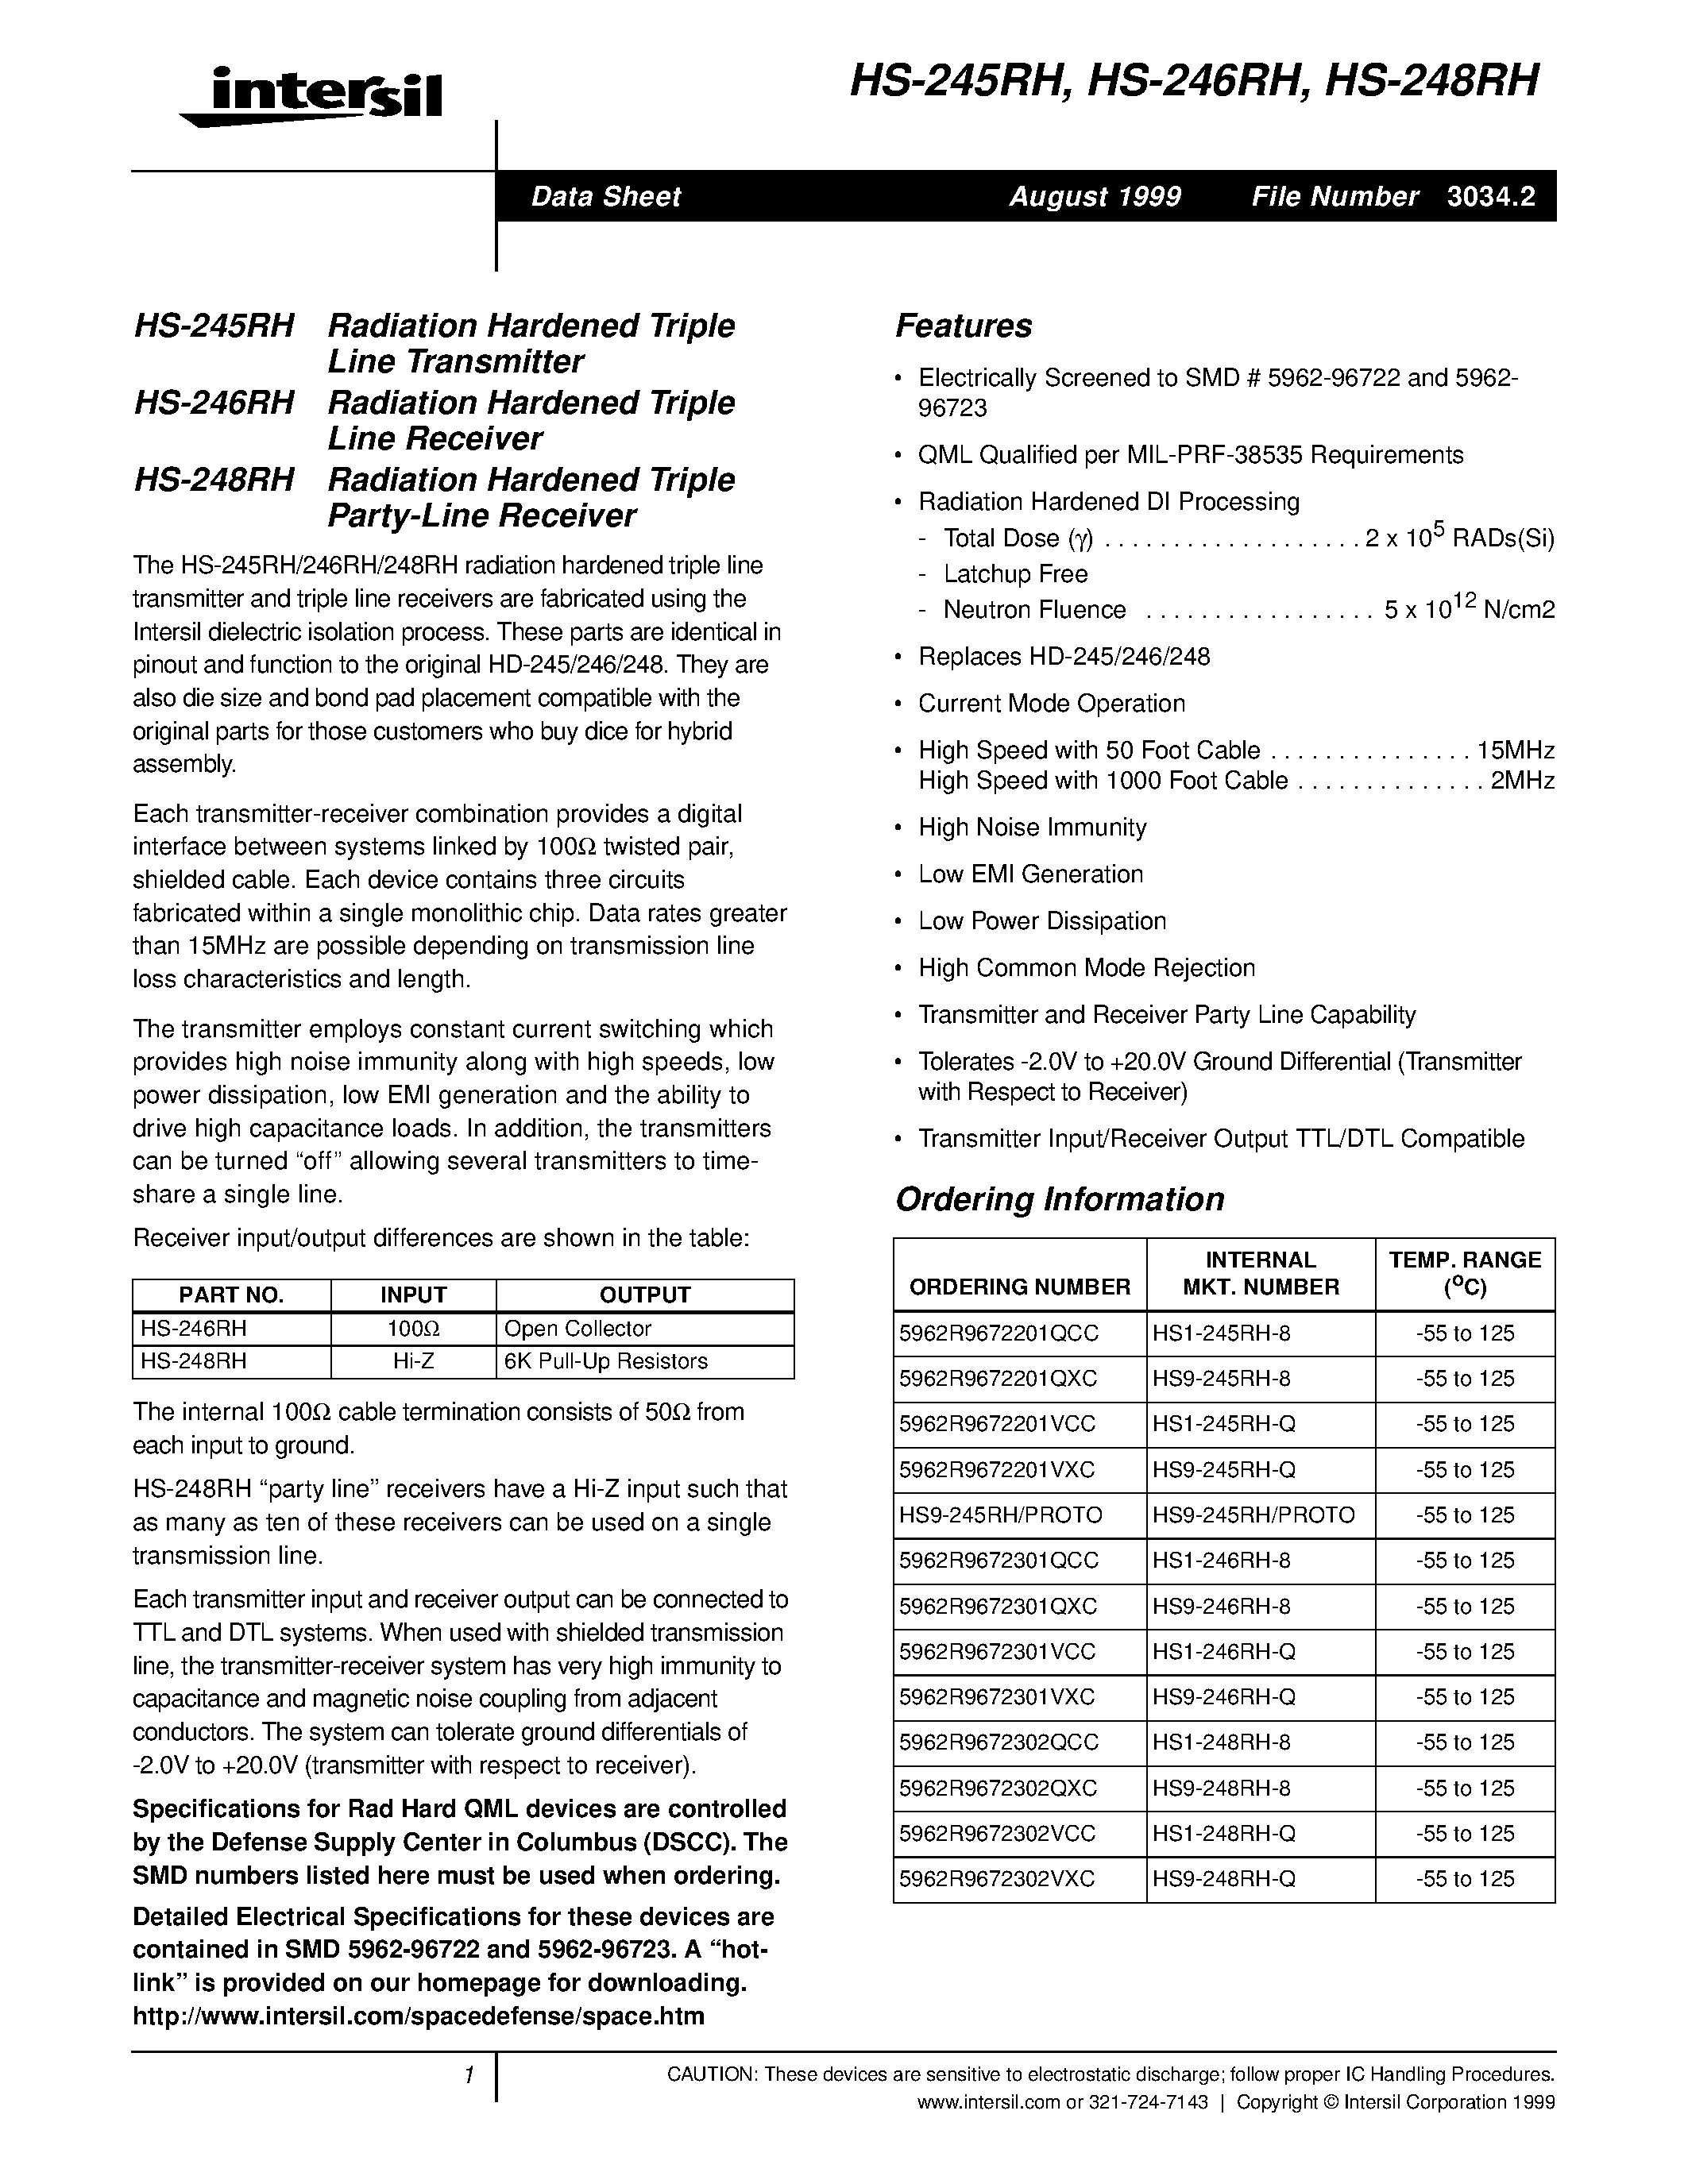 Даташит HS1-245RH-Q-Radiation Hardened Triple Line(party-Line) Transmitter страница 1